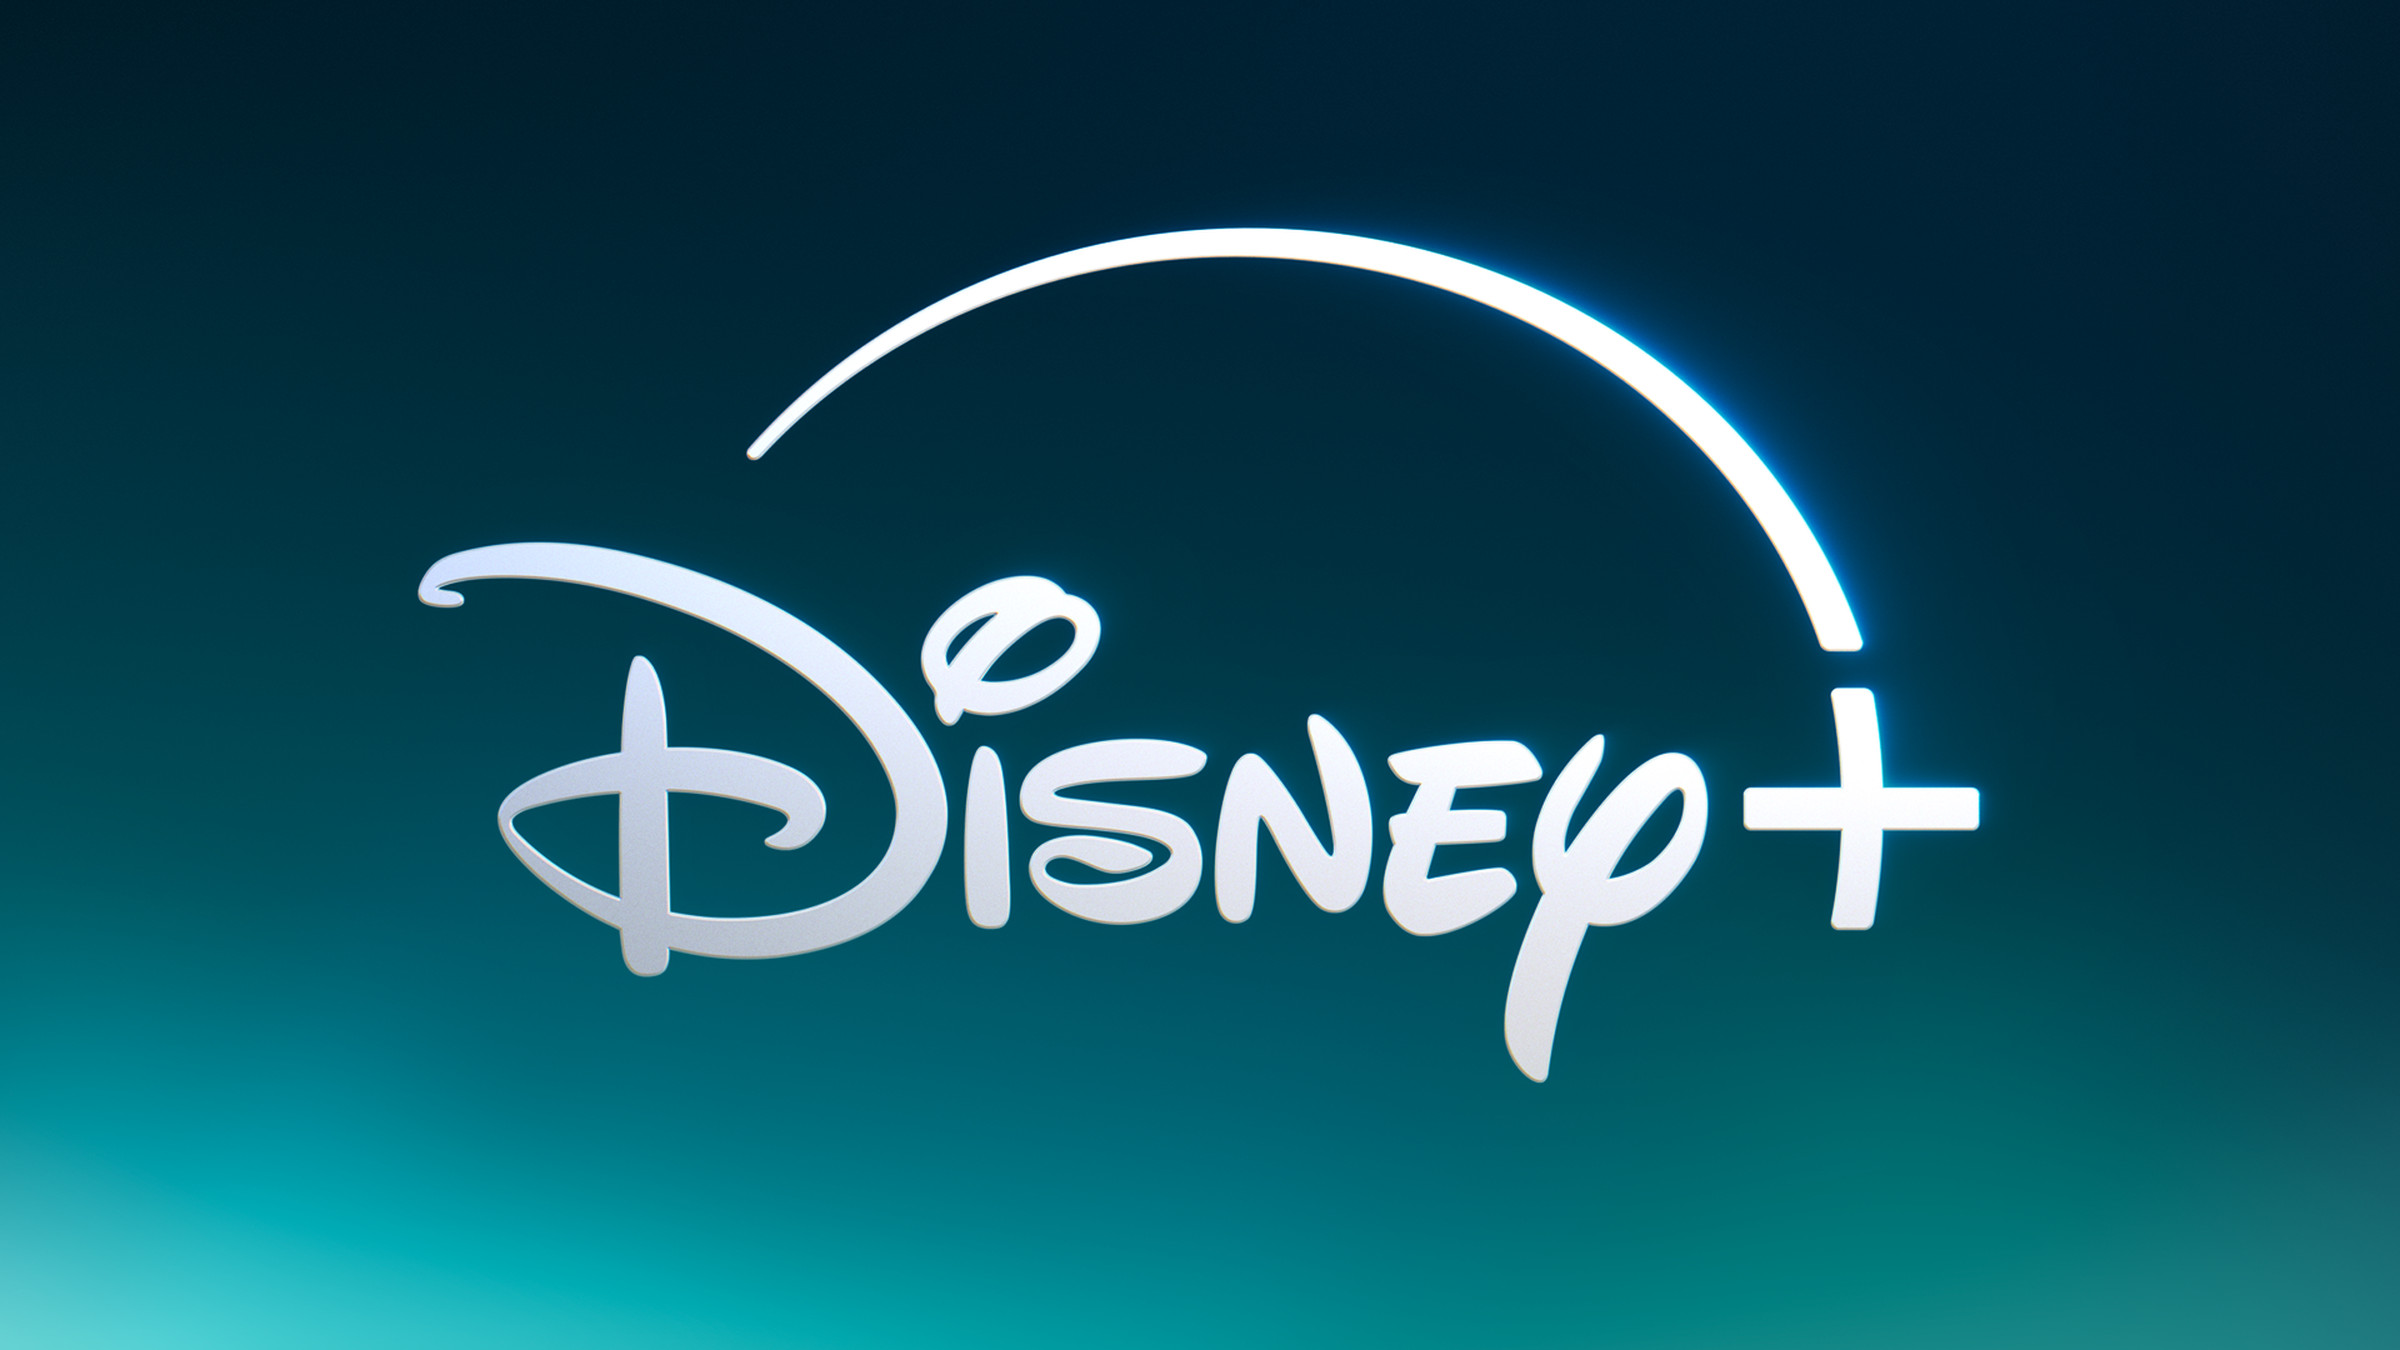 The new, greener Disney Plus logo.